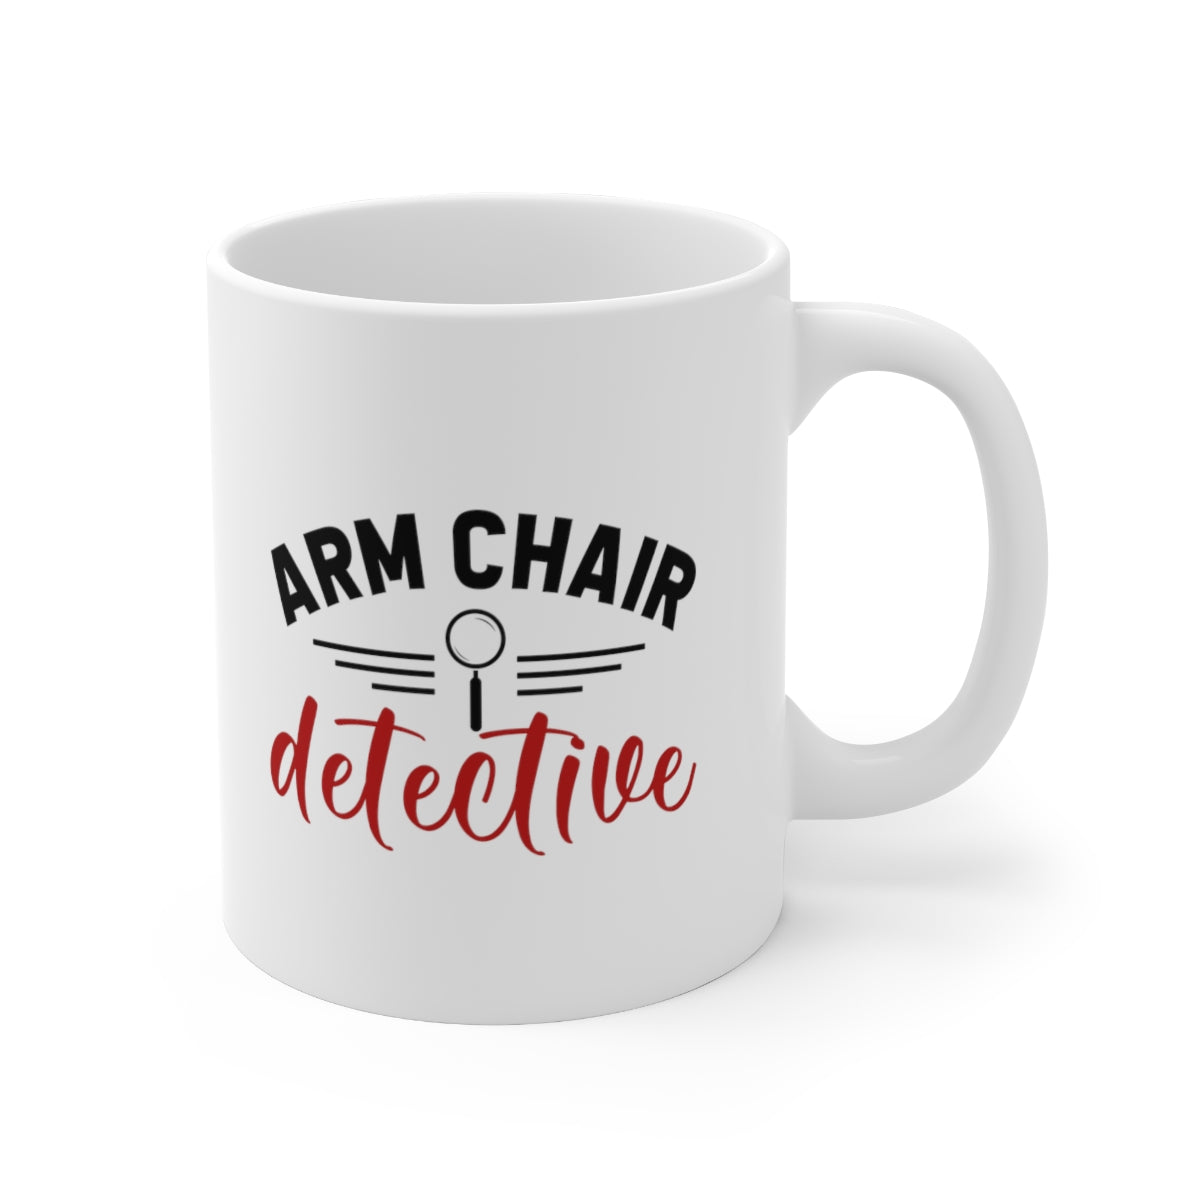 Arm Chair Detective | True Crime Shows Coffee Mugs